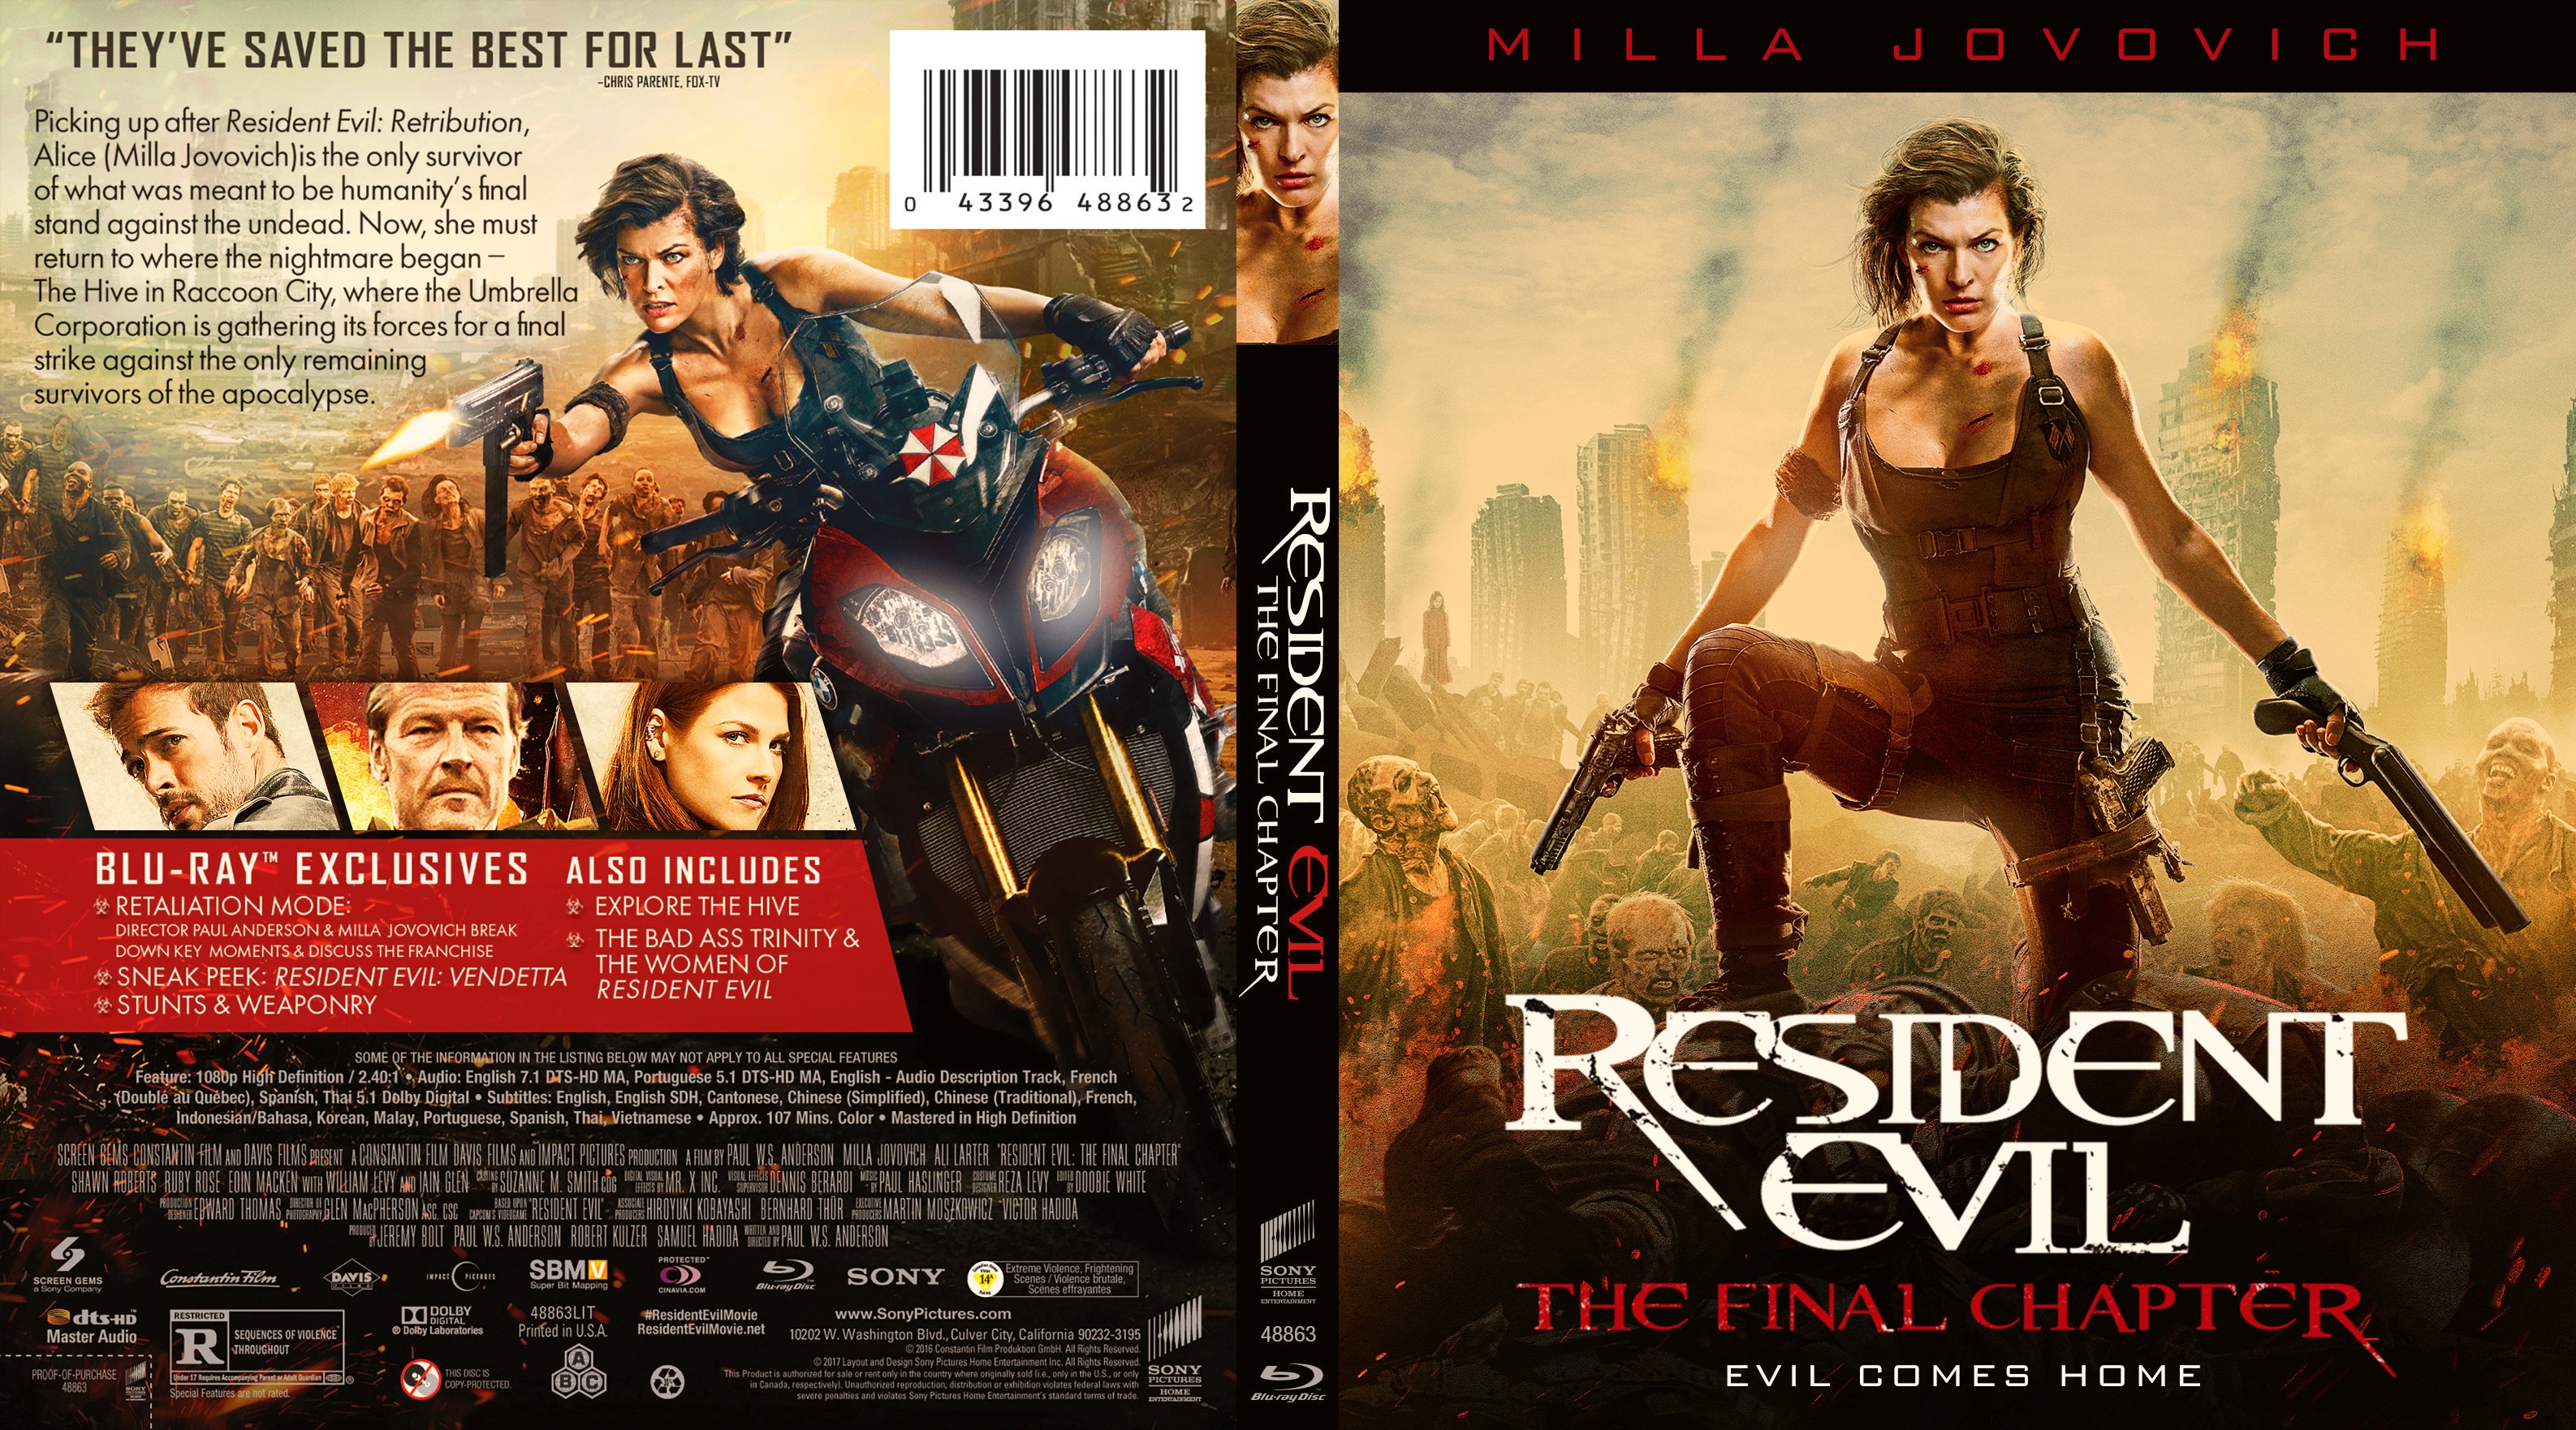 Resident Evil film series - Wikipedia